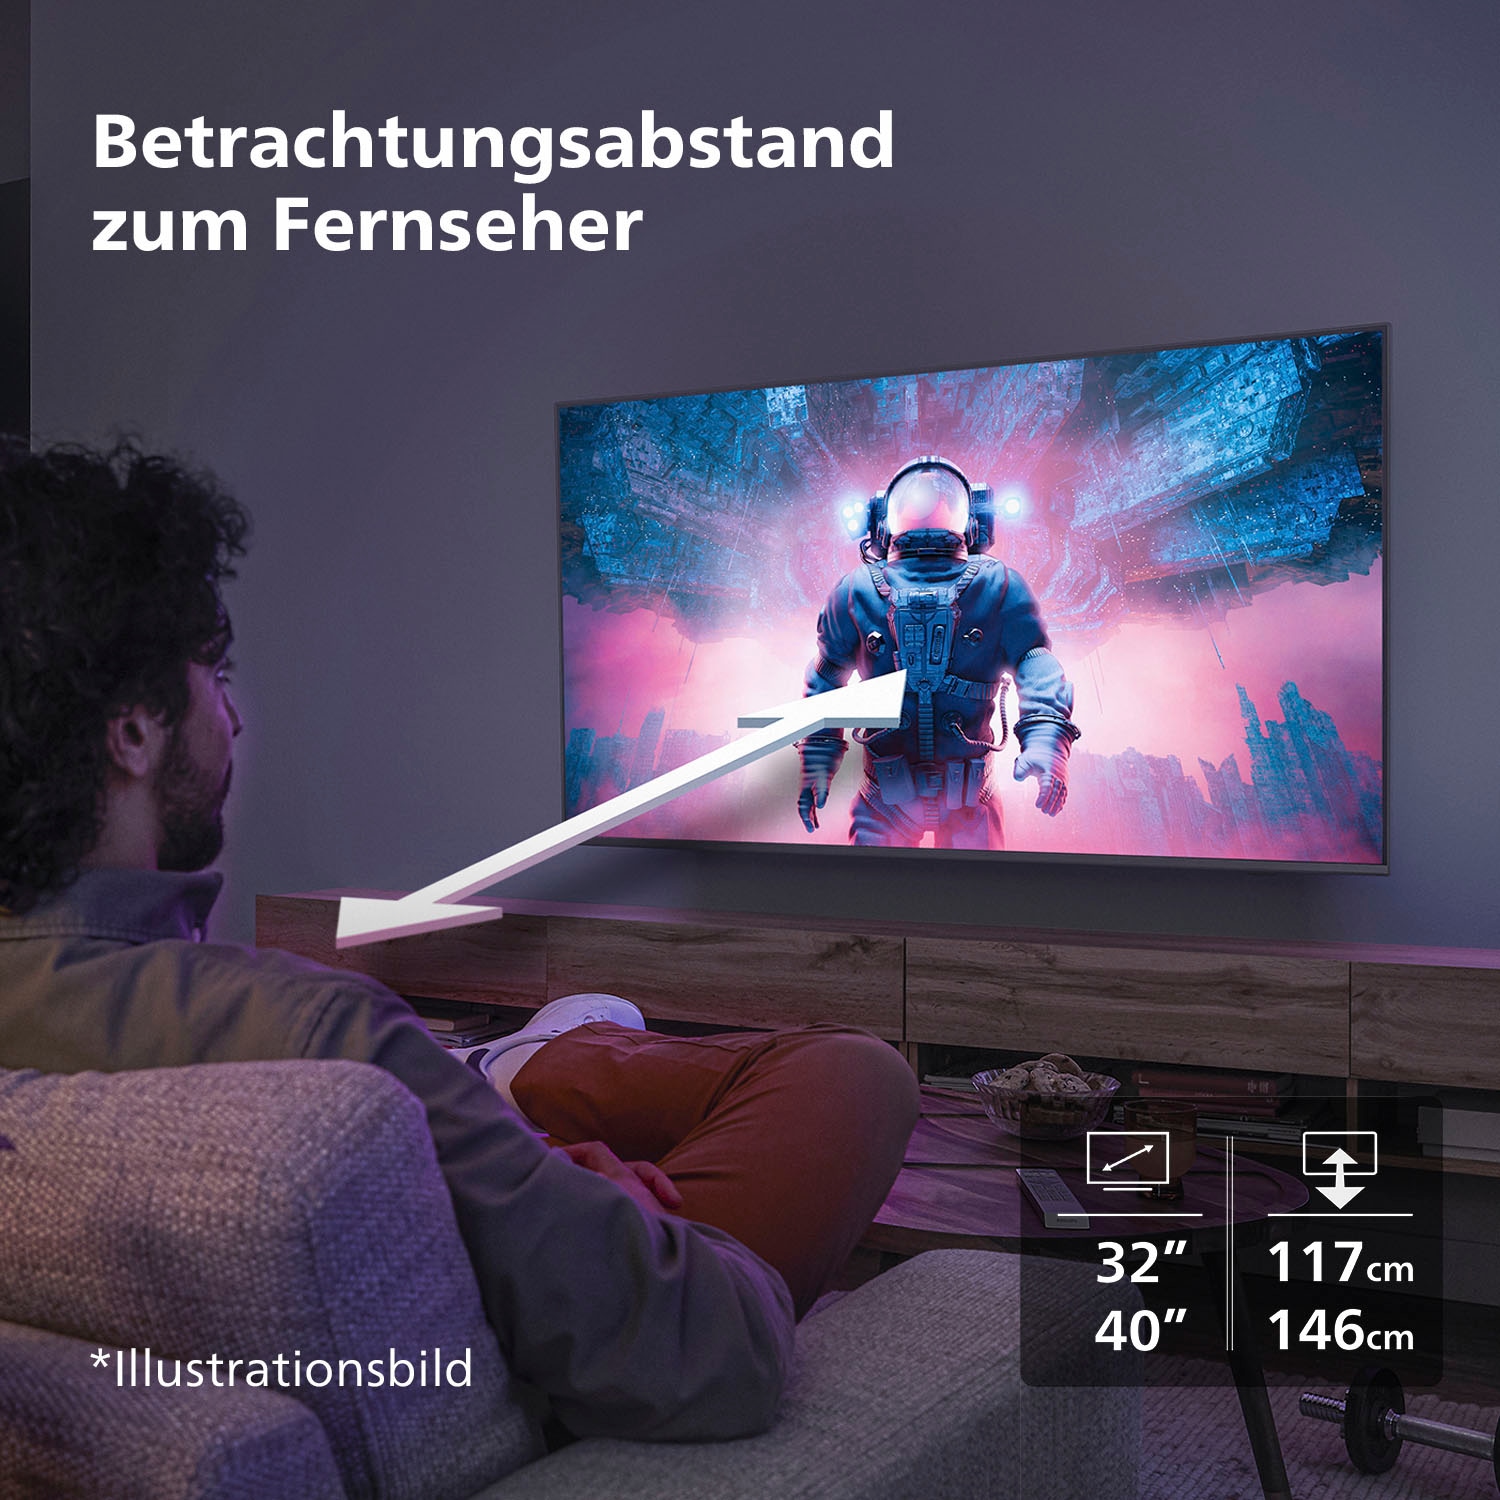 Philips LED-Fernseher, 80 cm/32 Zoll, HD, Smart-TV